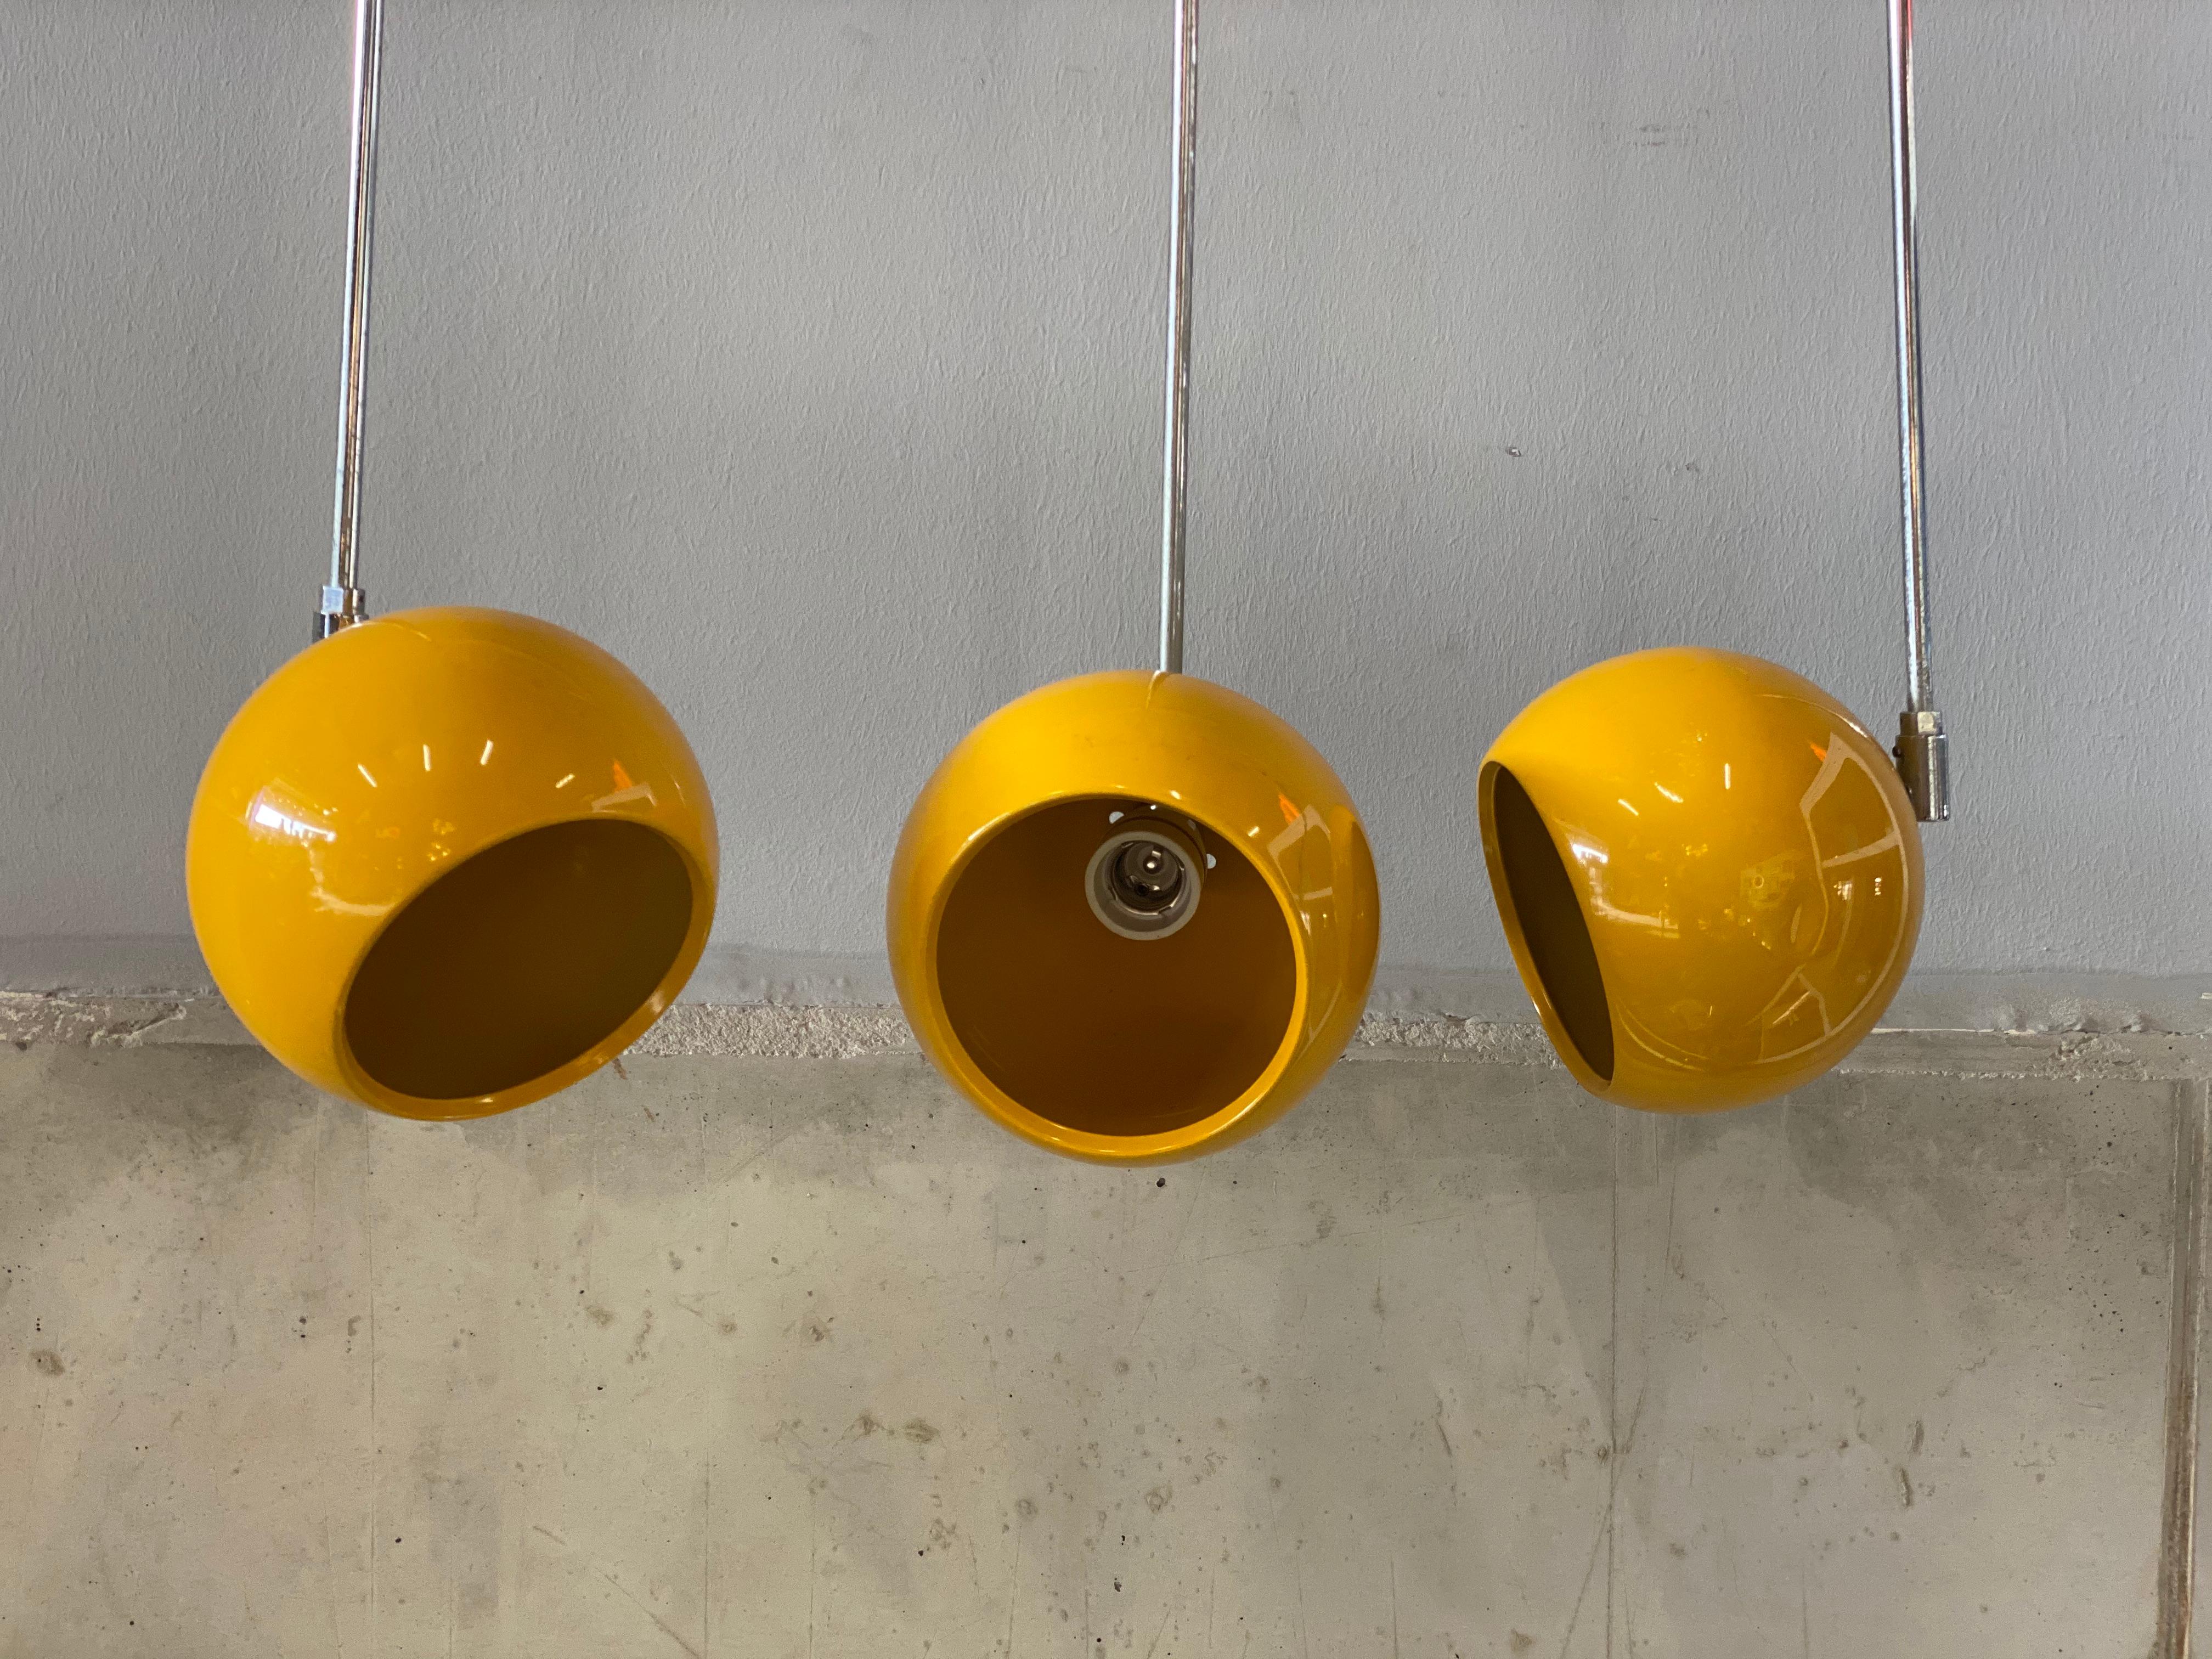 Metal Set of Yellow Pendant Lamps / Spots, Space Age, 1970s Design, Panton Style